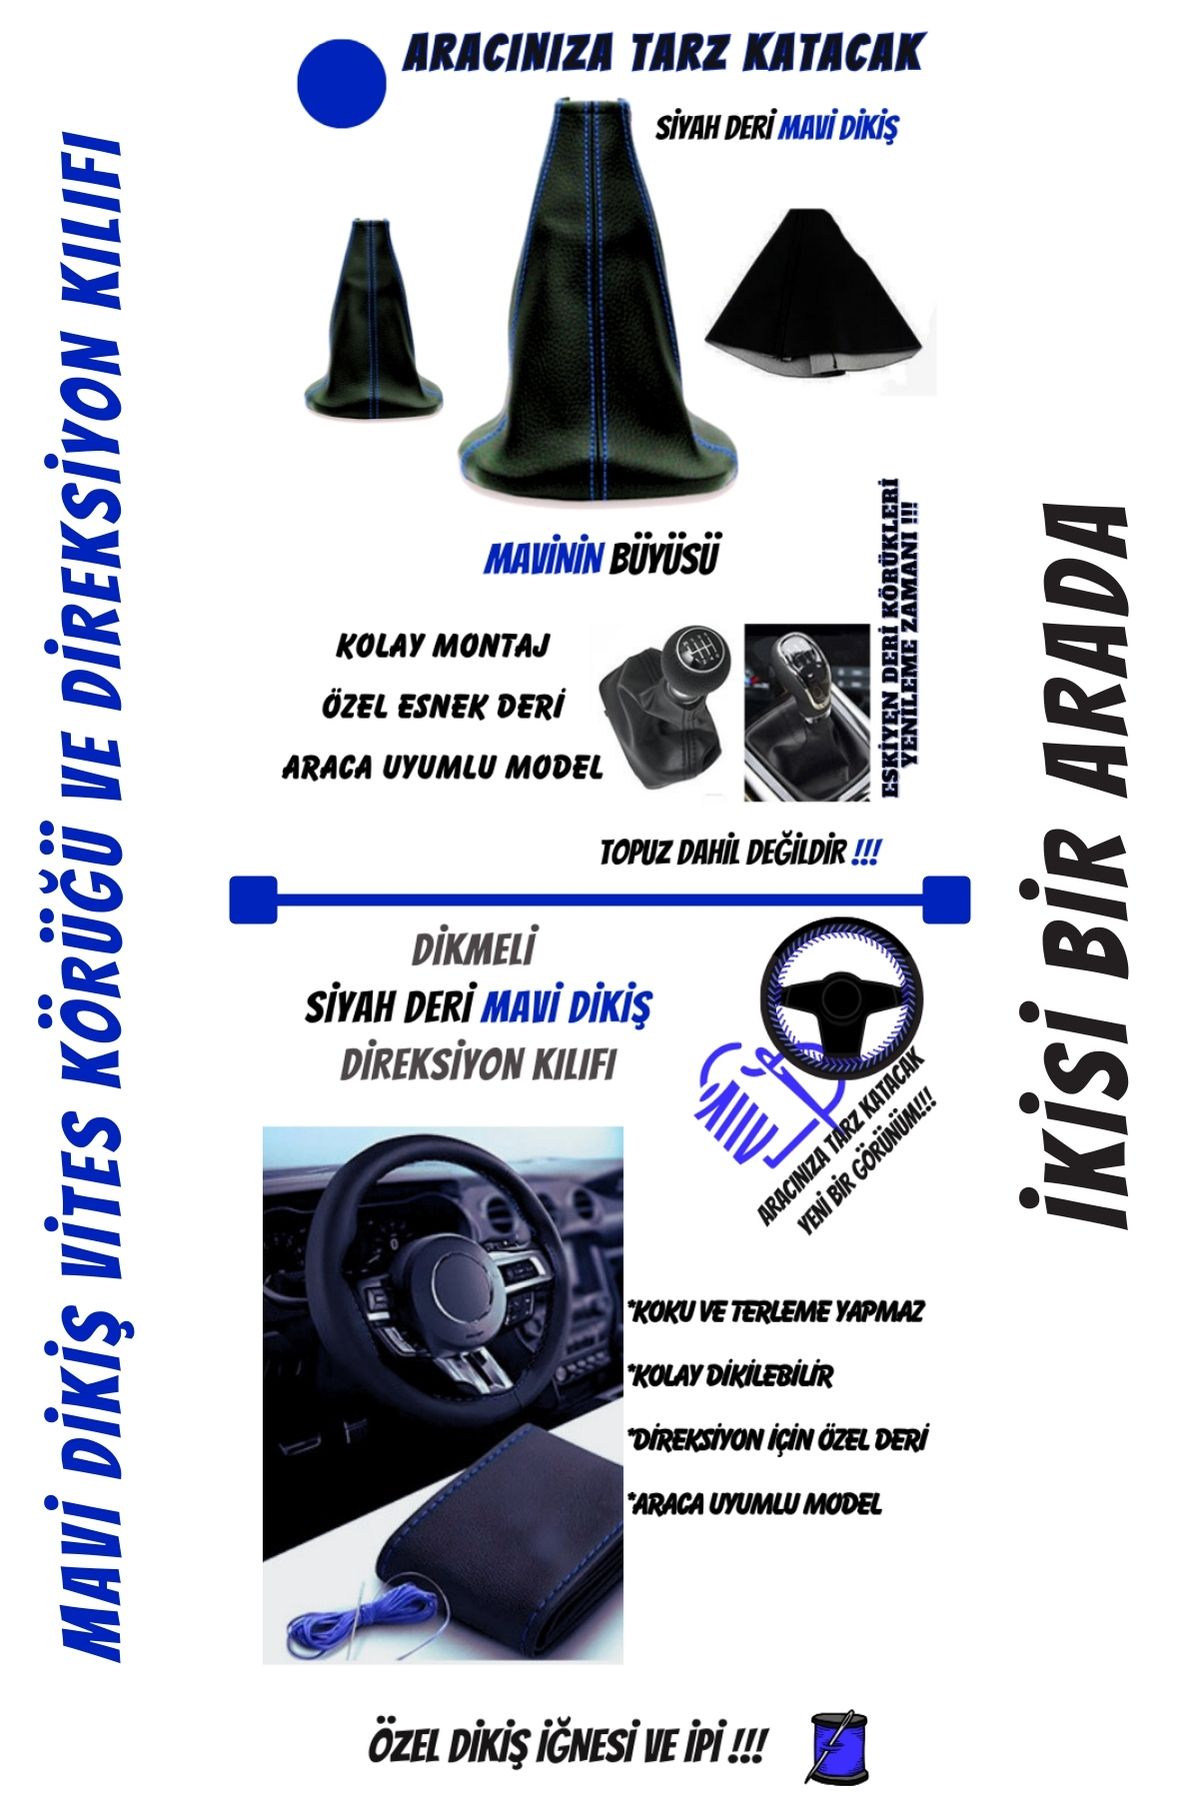 Galeria foradels Hyundai Getz 2002-2009 Uyumlu Direksiyon Kılıfı Ve Vites Körüğü Siyah Deri Mavi Nakışlı